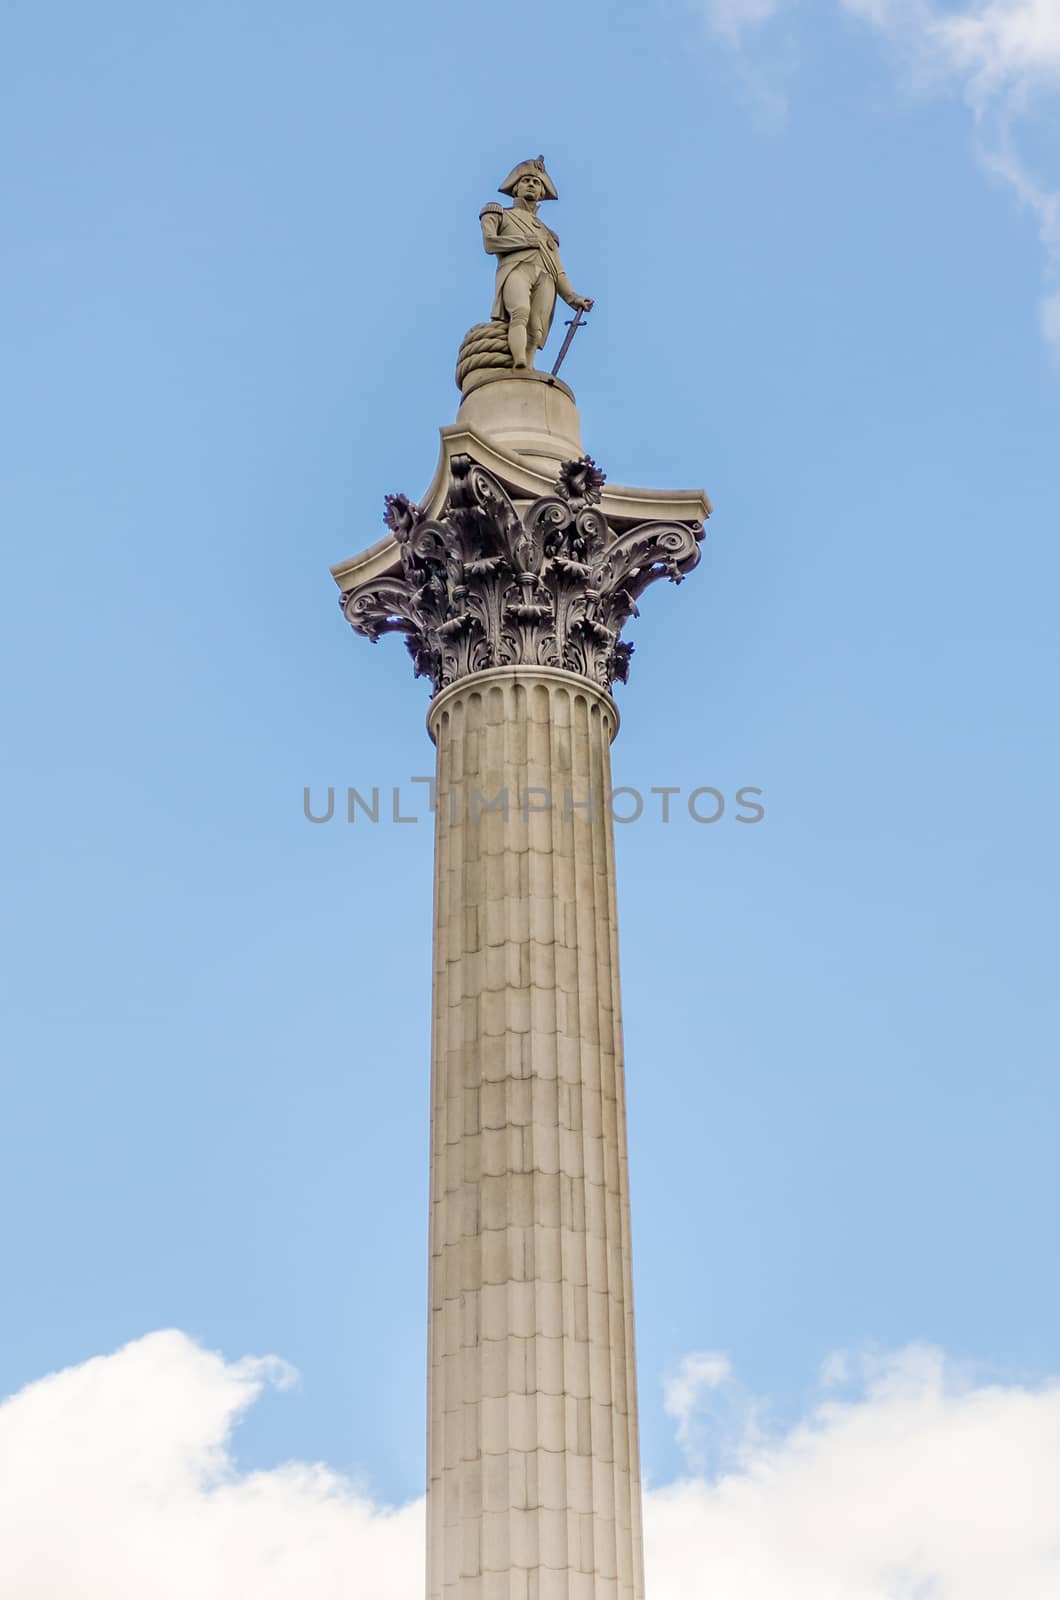 Nelson Statue at Trafalgar Square, London, UK